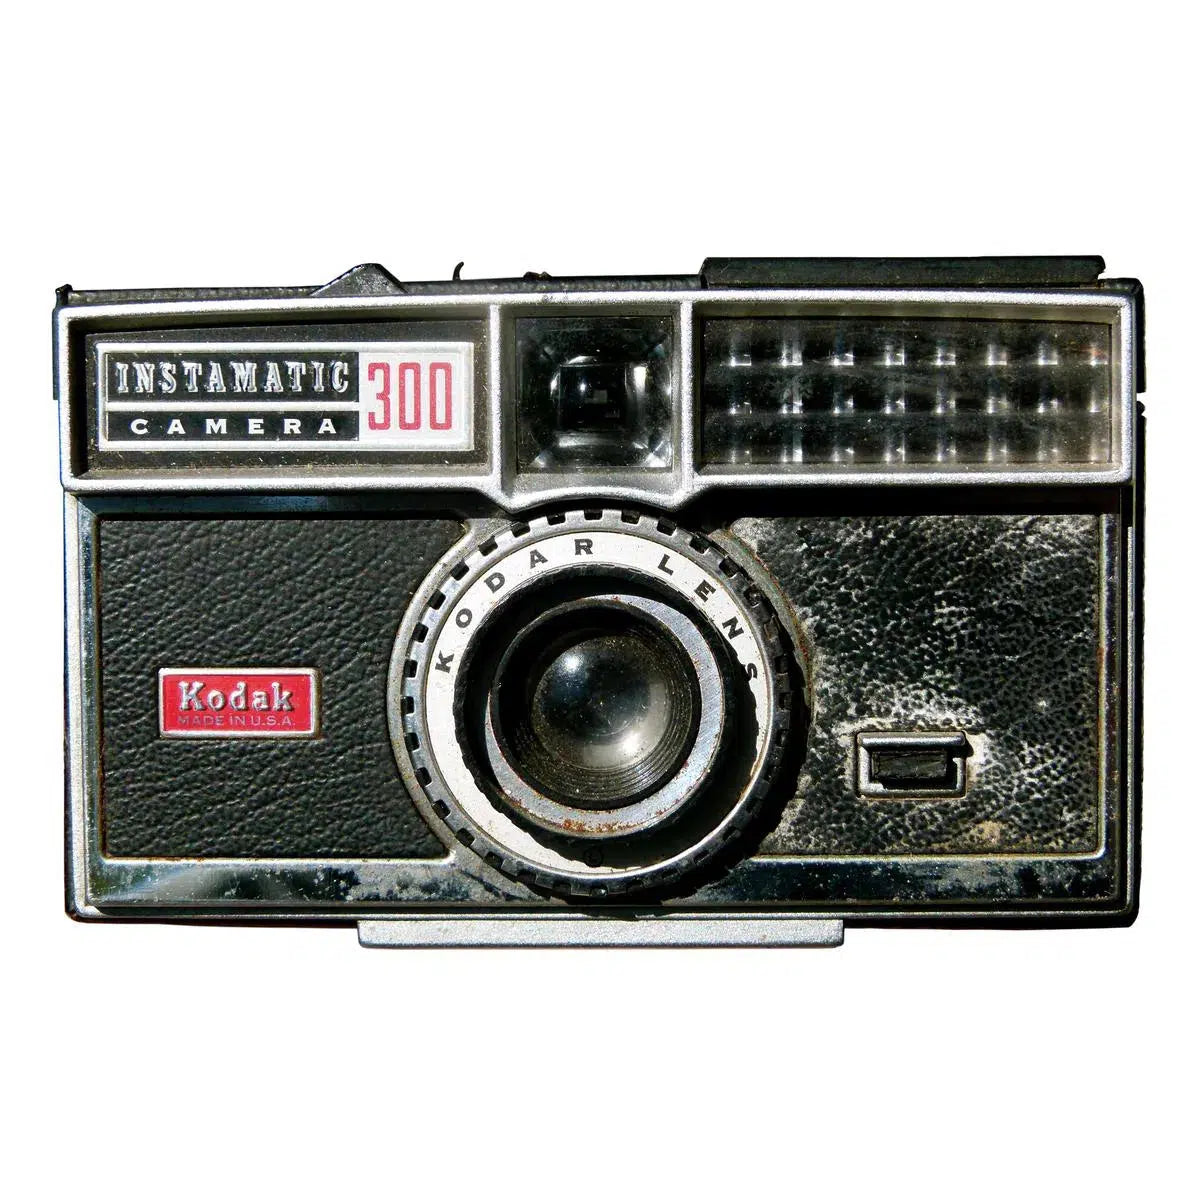 Kodak Instamatic 300 Camera, by Brad Beyer-PurePhoto